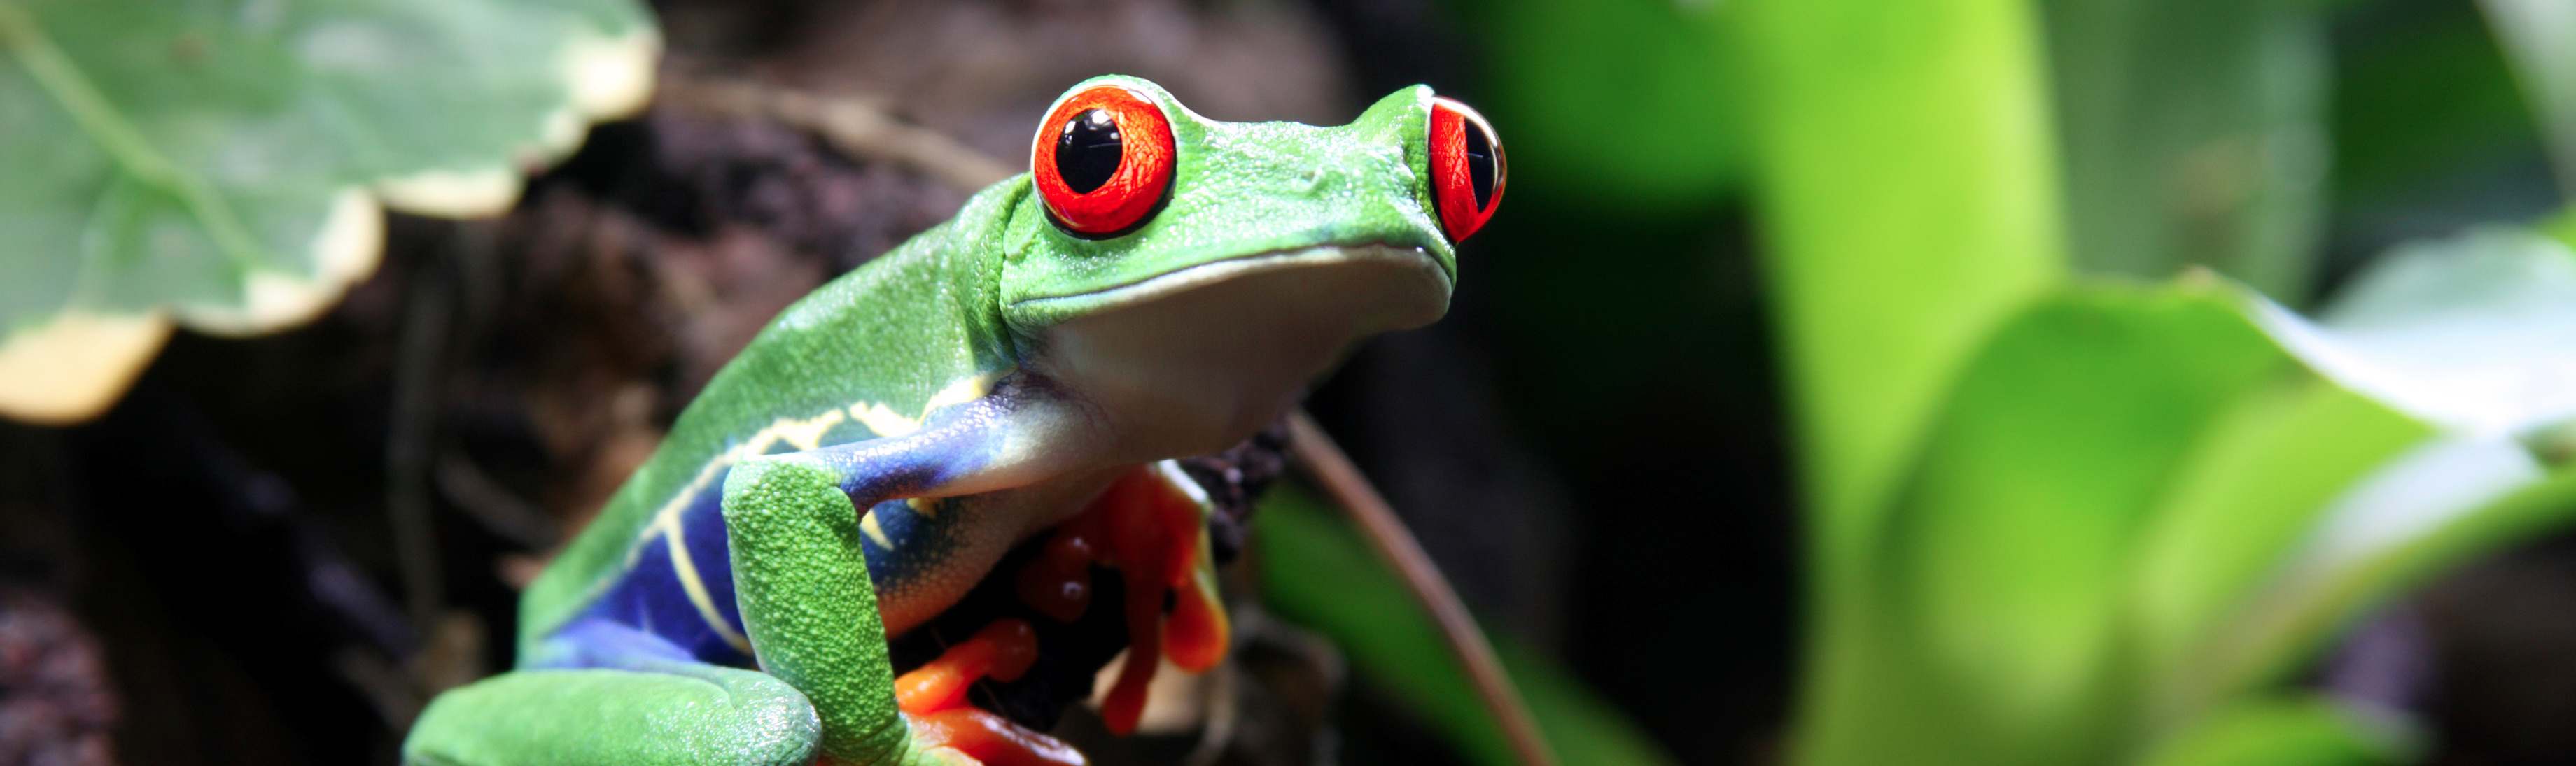 Exquisite amphibious beauty, Vibrant red-eyed frog, Nature's wonders, 4K wallpaper, 3680x1100 Dual Screen Desktop